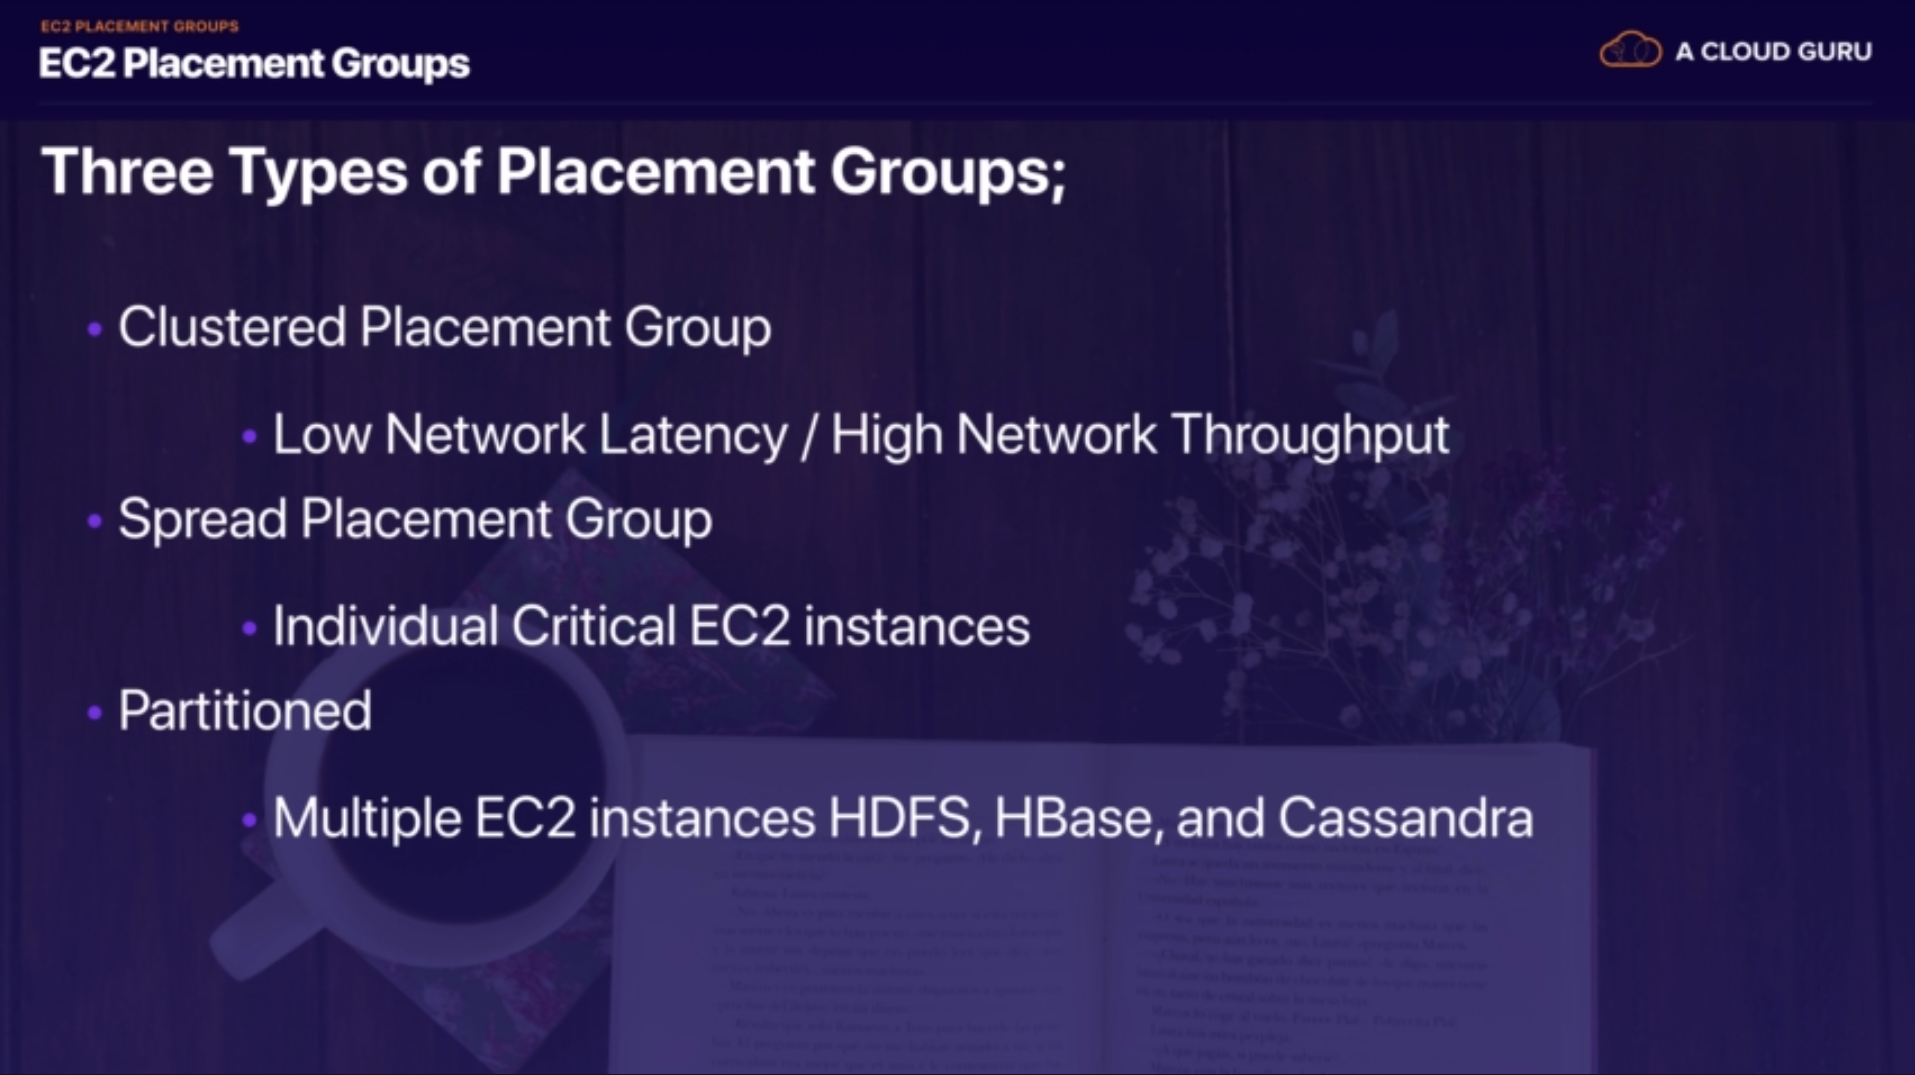 EC2 Placement groups